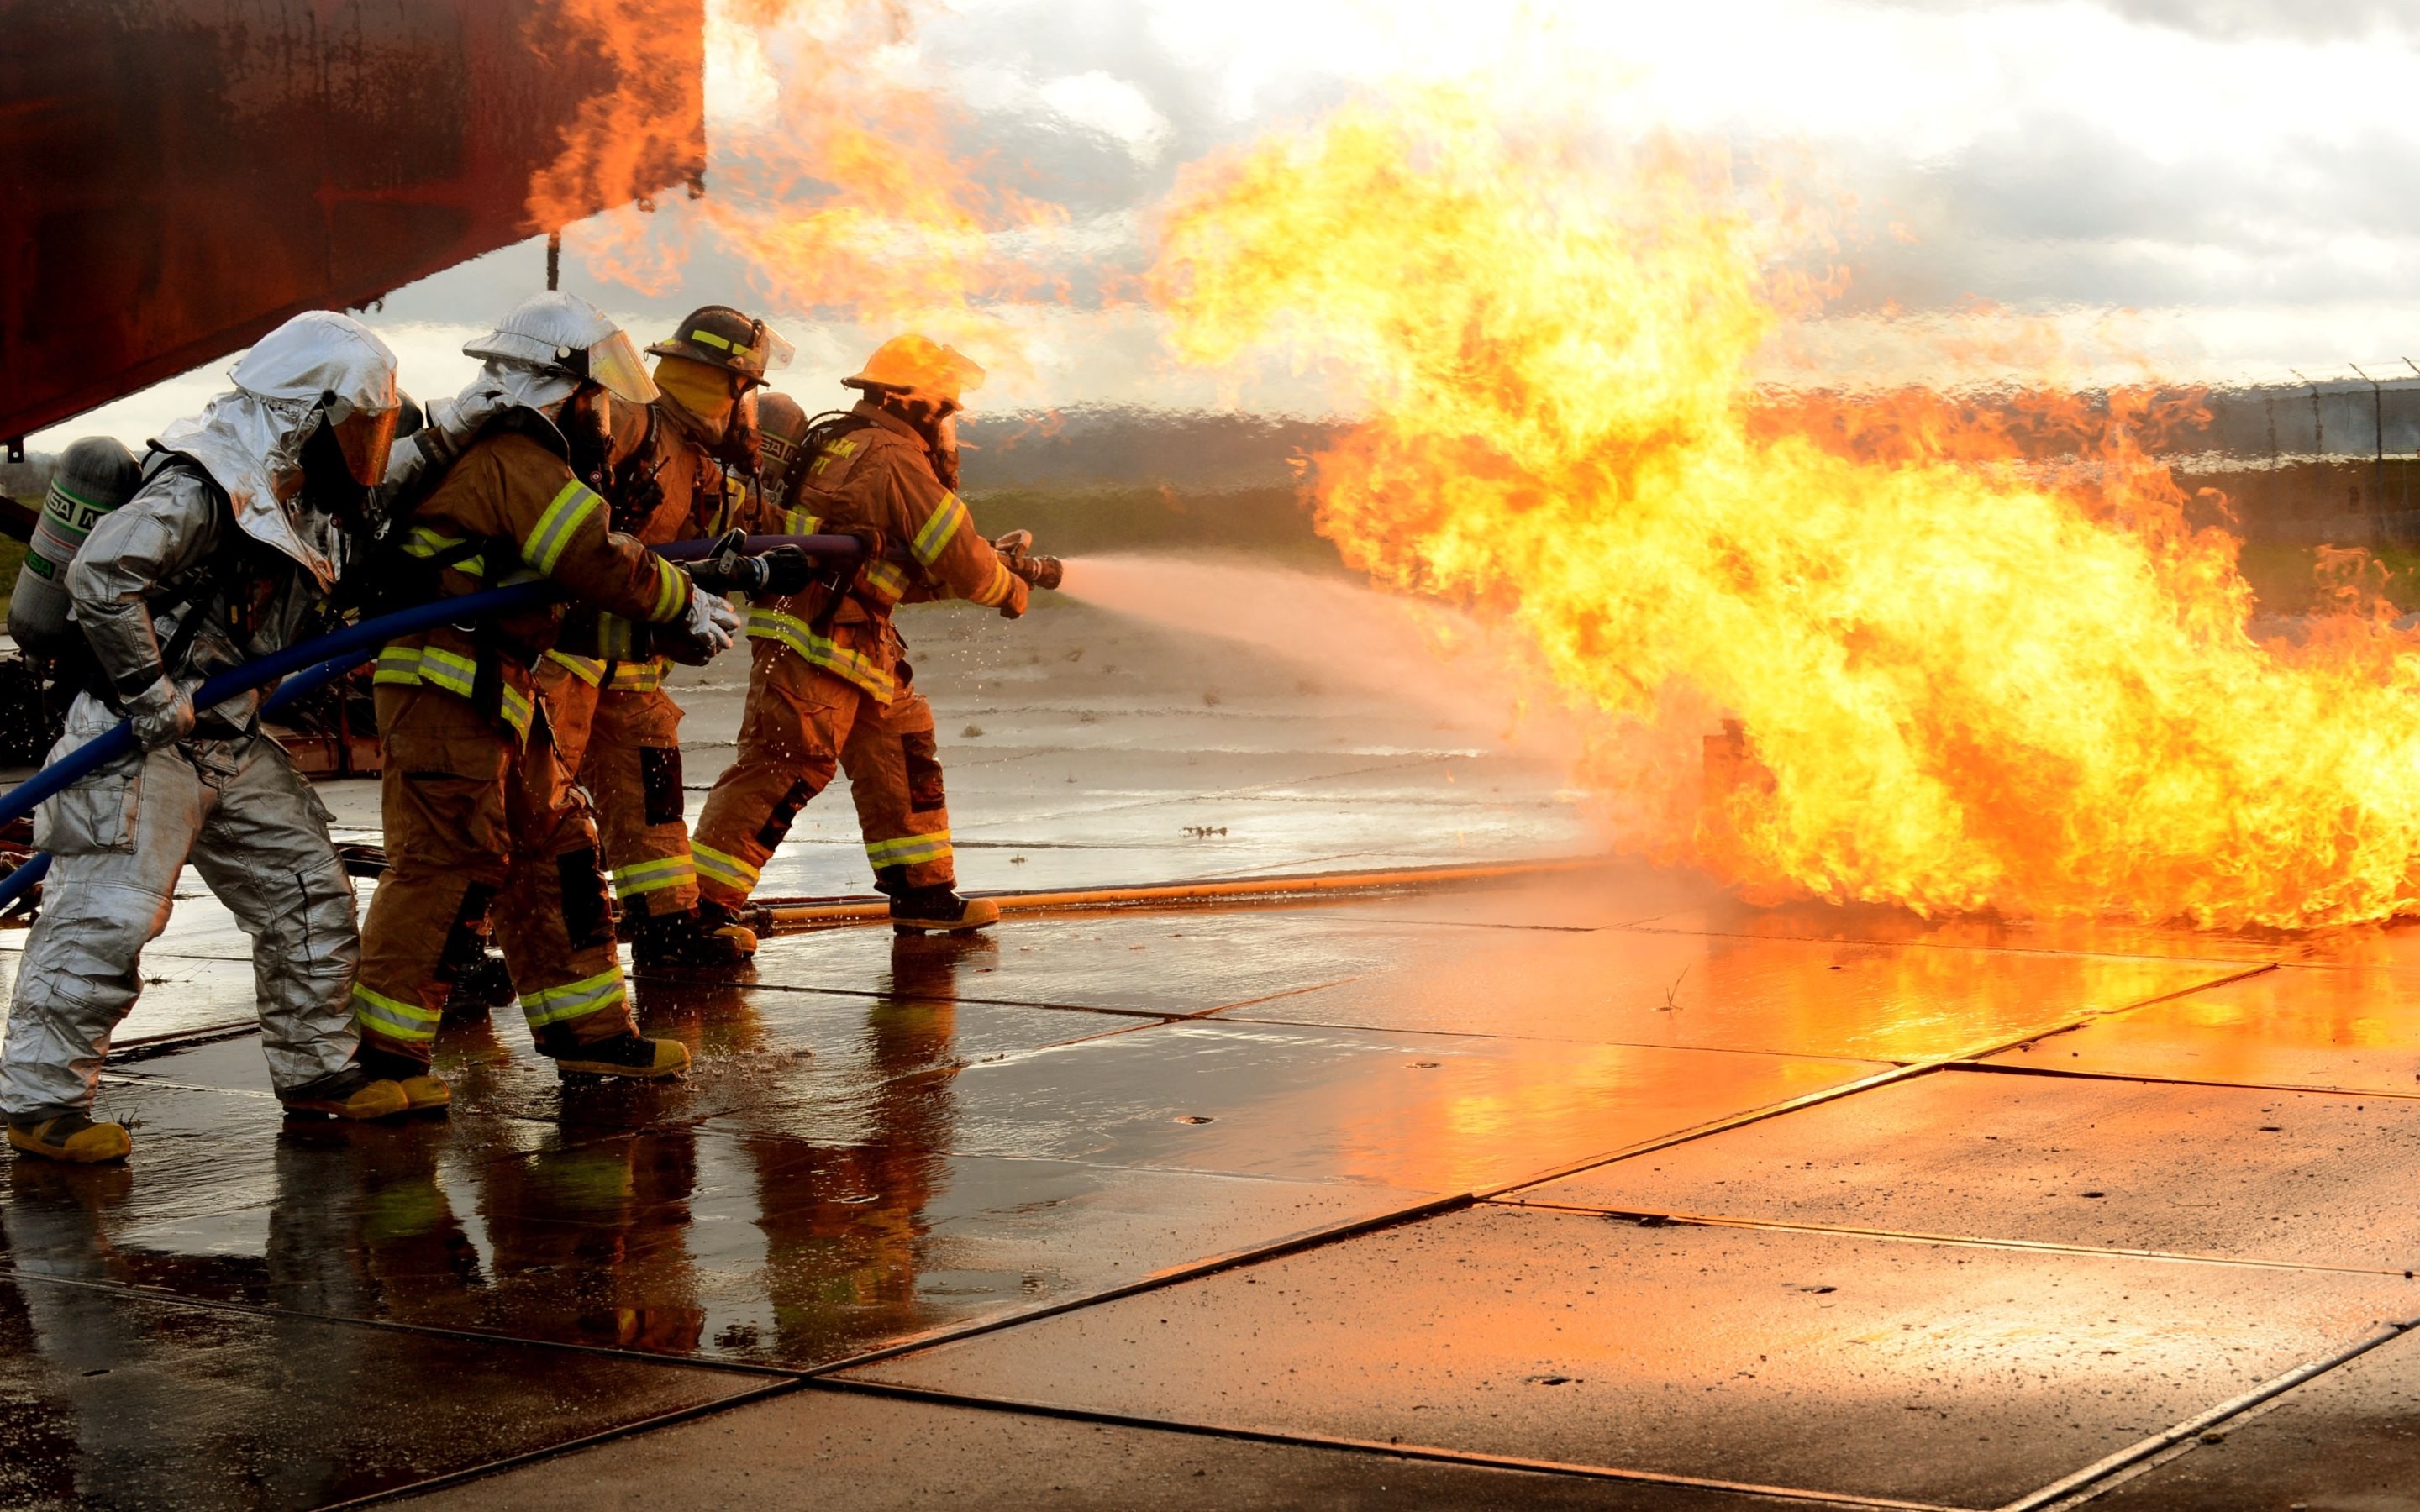 Men water fire workers explosion drill firefight screenshot firefighter